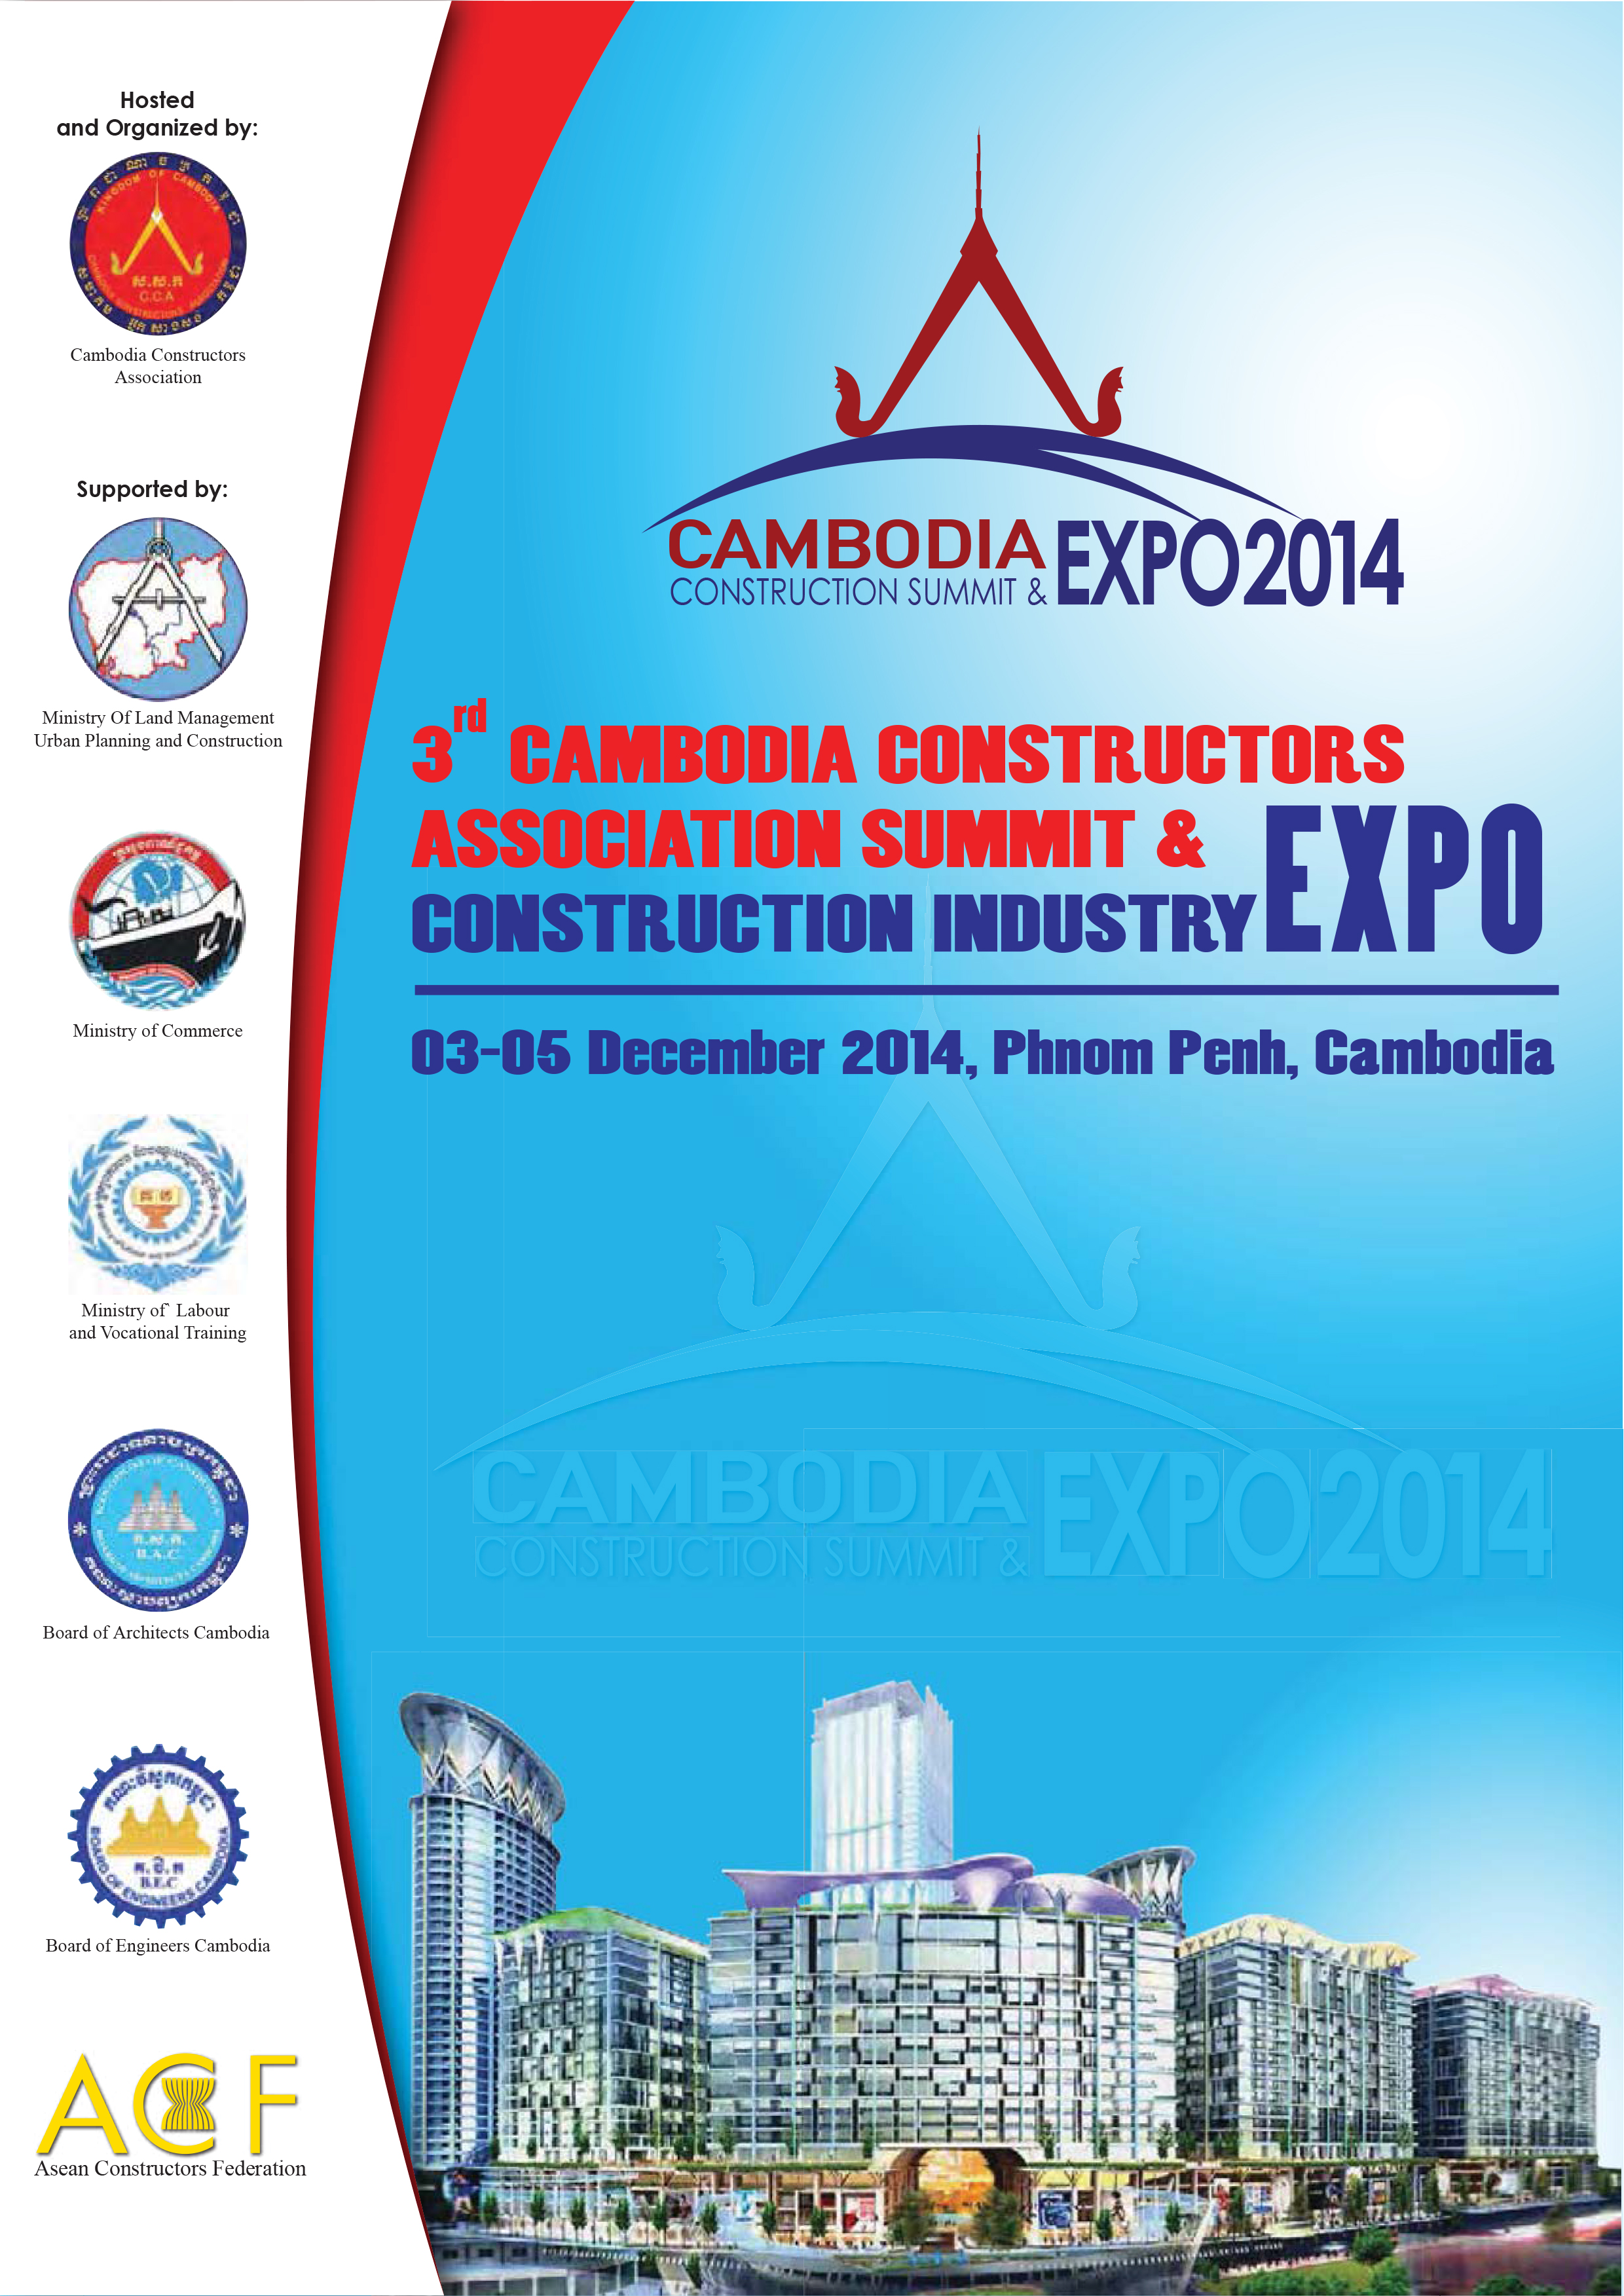 CAMBODIA CONSTRUCTION INDUSTRIAL EXPO 2014